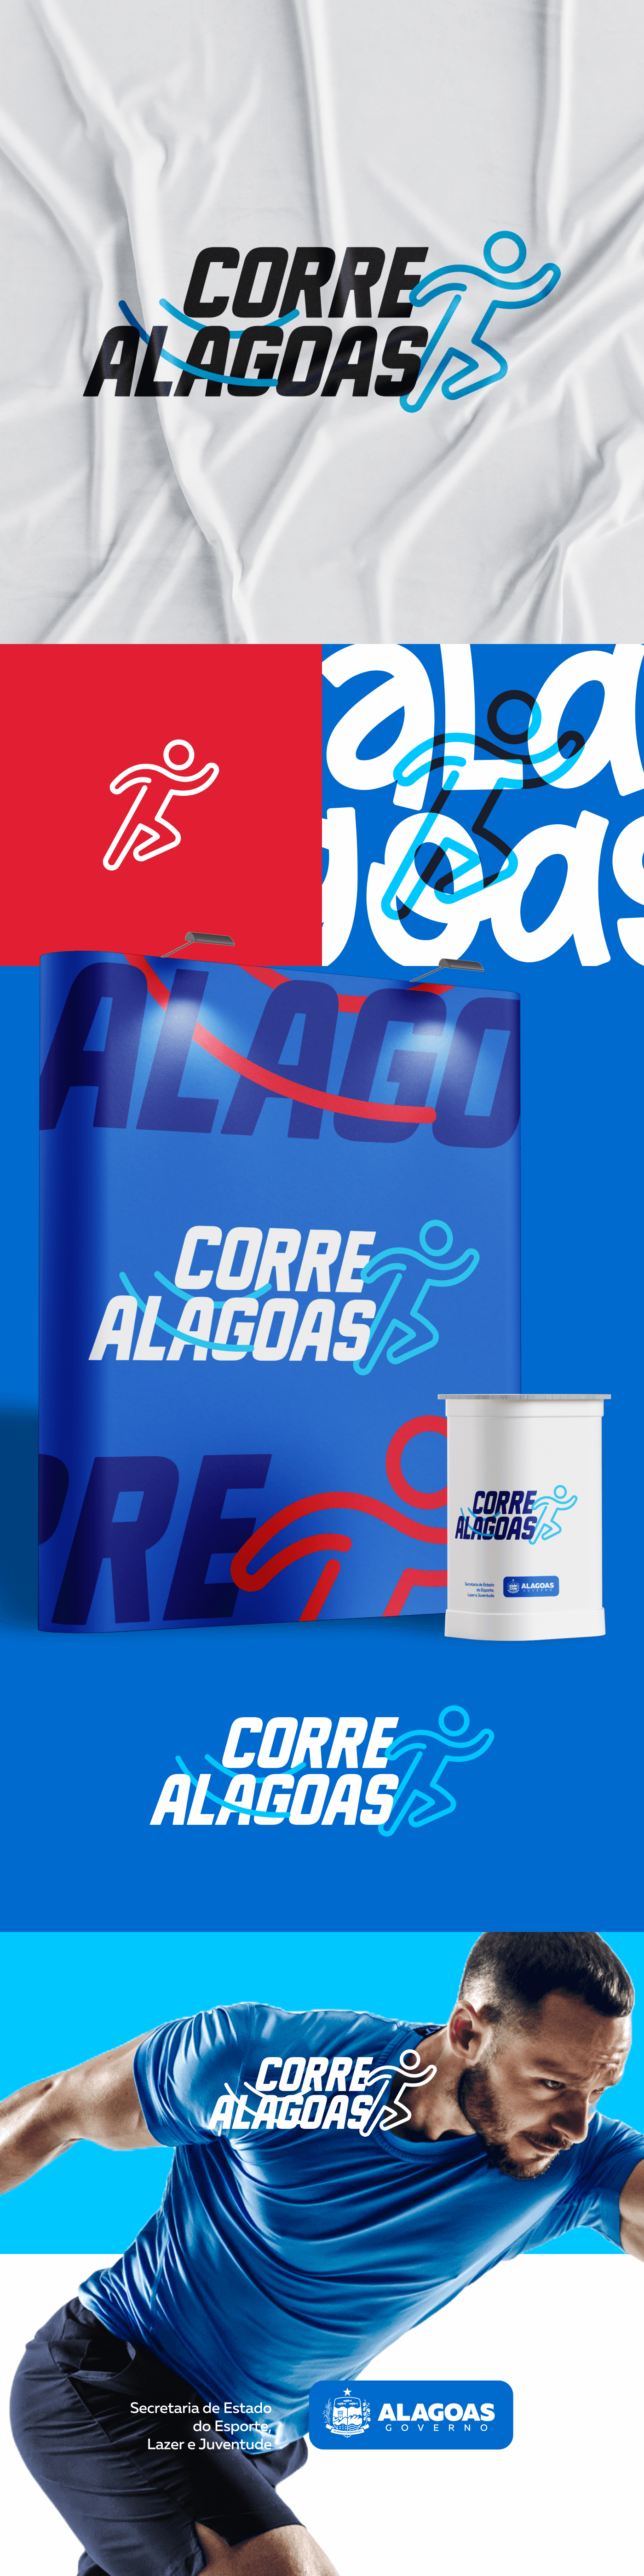 Alagoas identidade visual Logo Design identity design Maceió corrida esportes sport Estado